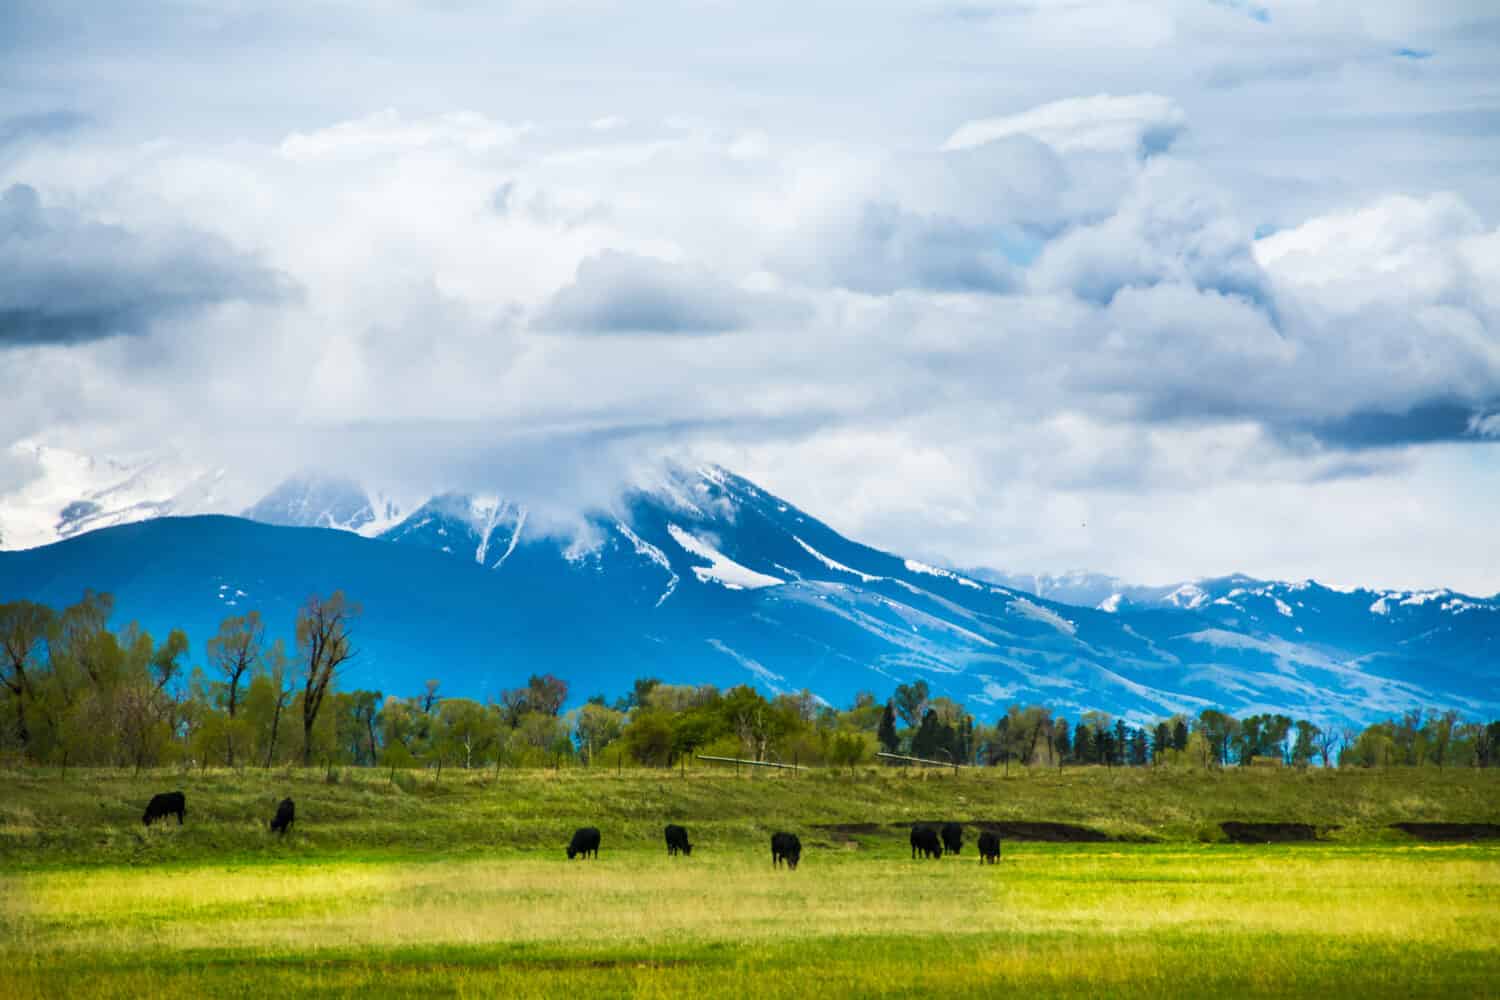 Basse nuvole sospese su Paradise Valley, tra Bozeman Montana e Livingston Montana.  Il bestiame sta pascolando.  Belle montagne blu profonde e pascoli verdi.